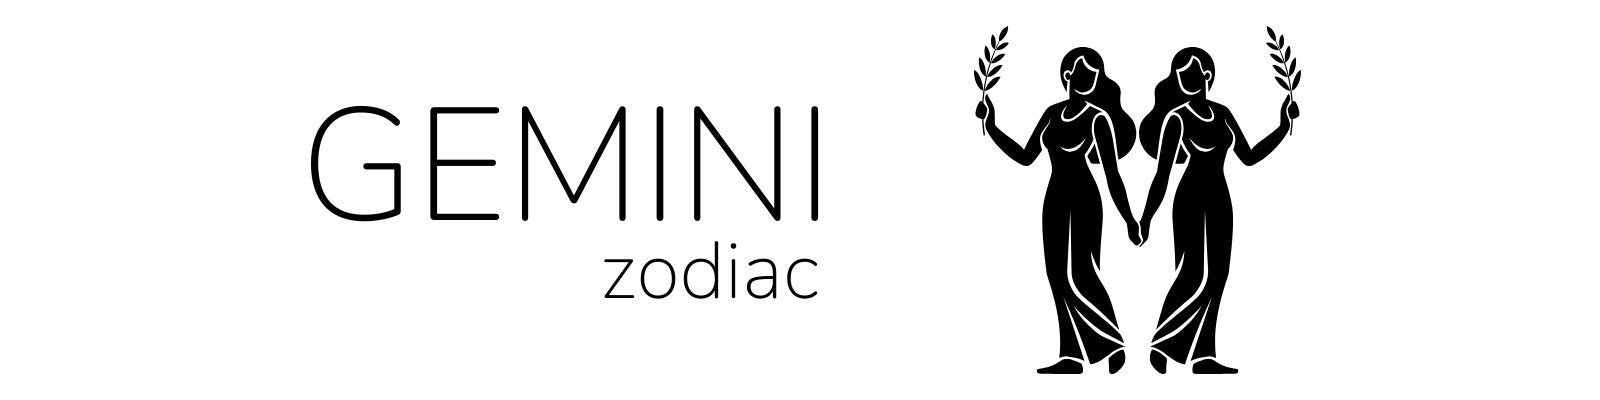 Image of Gemini zodiac sign.